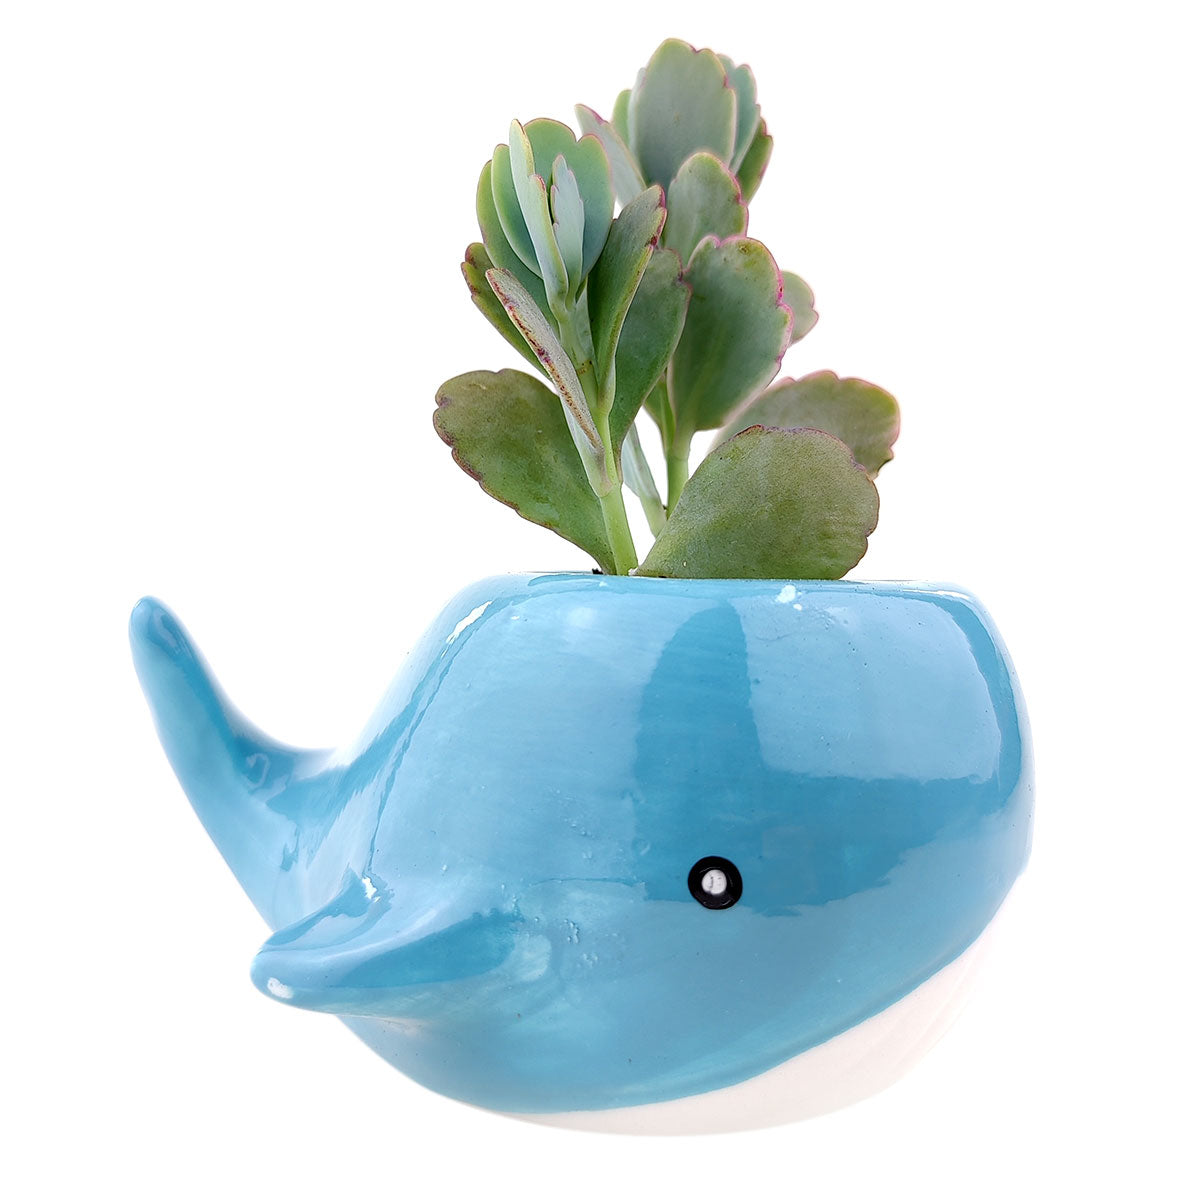 Whale Pot Pot for sale, Ceramic mini pot for succulents and flowers, Ceramic Whale Pot Pot, Cute succulent planter, ideal gifts for mom, Whale Pot for sale